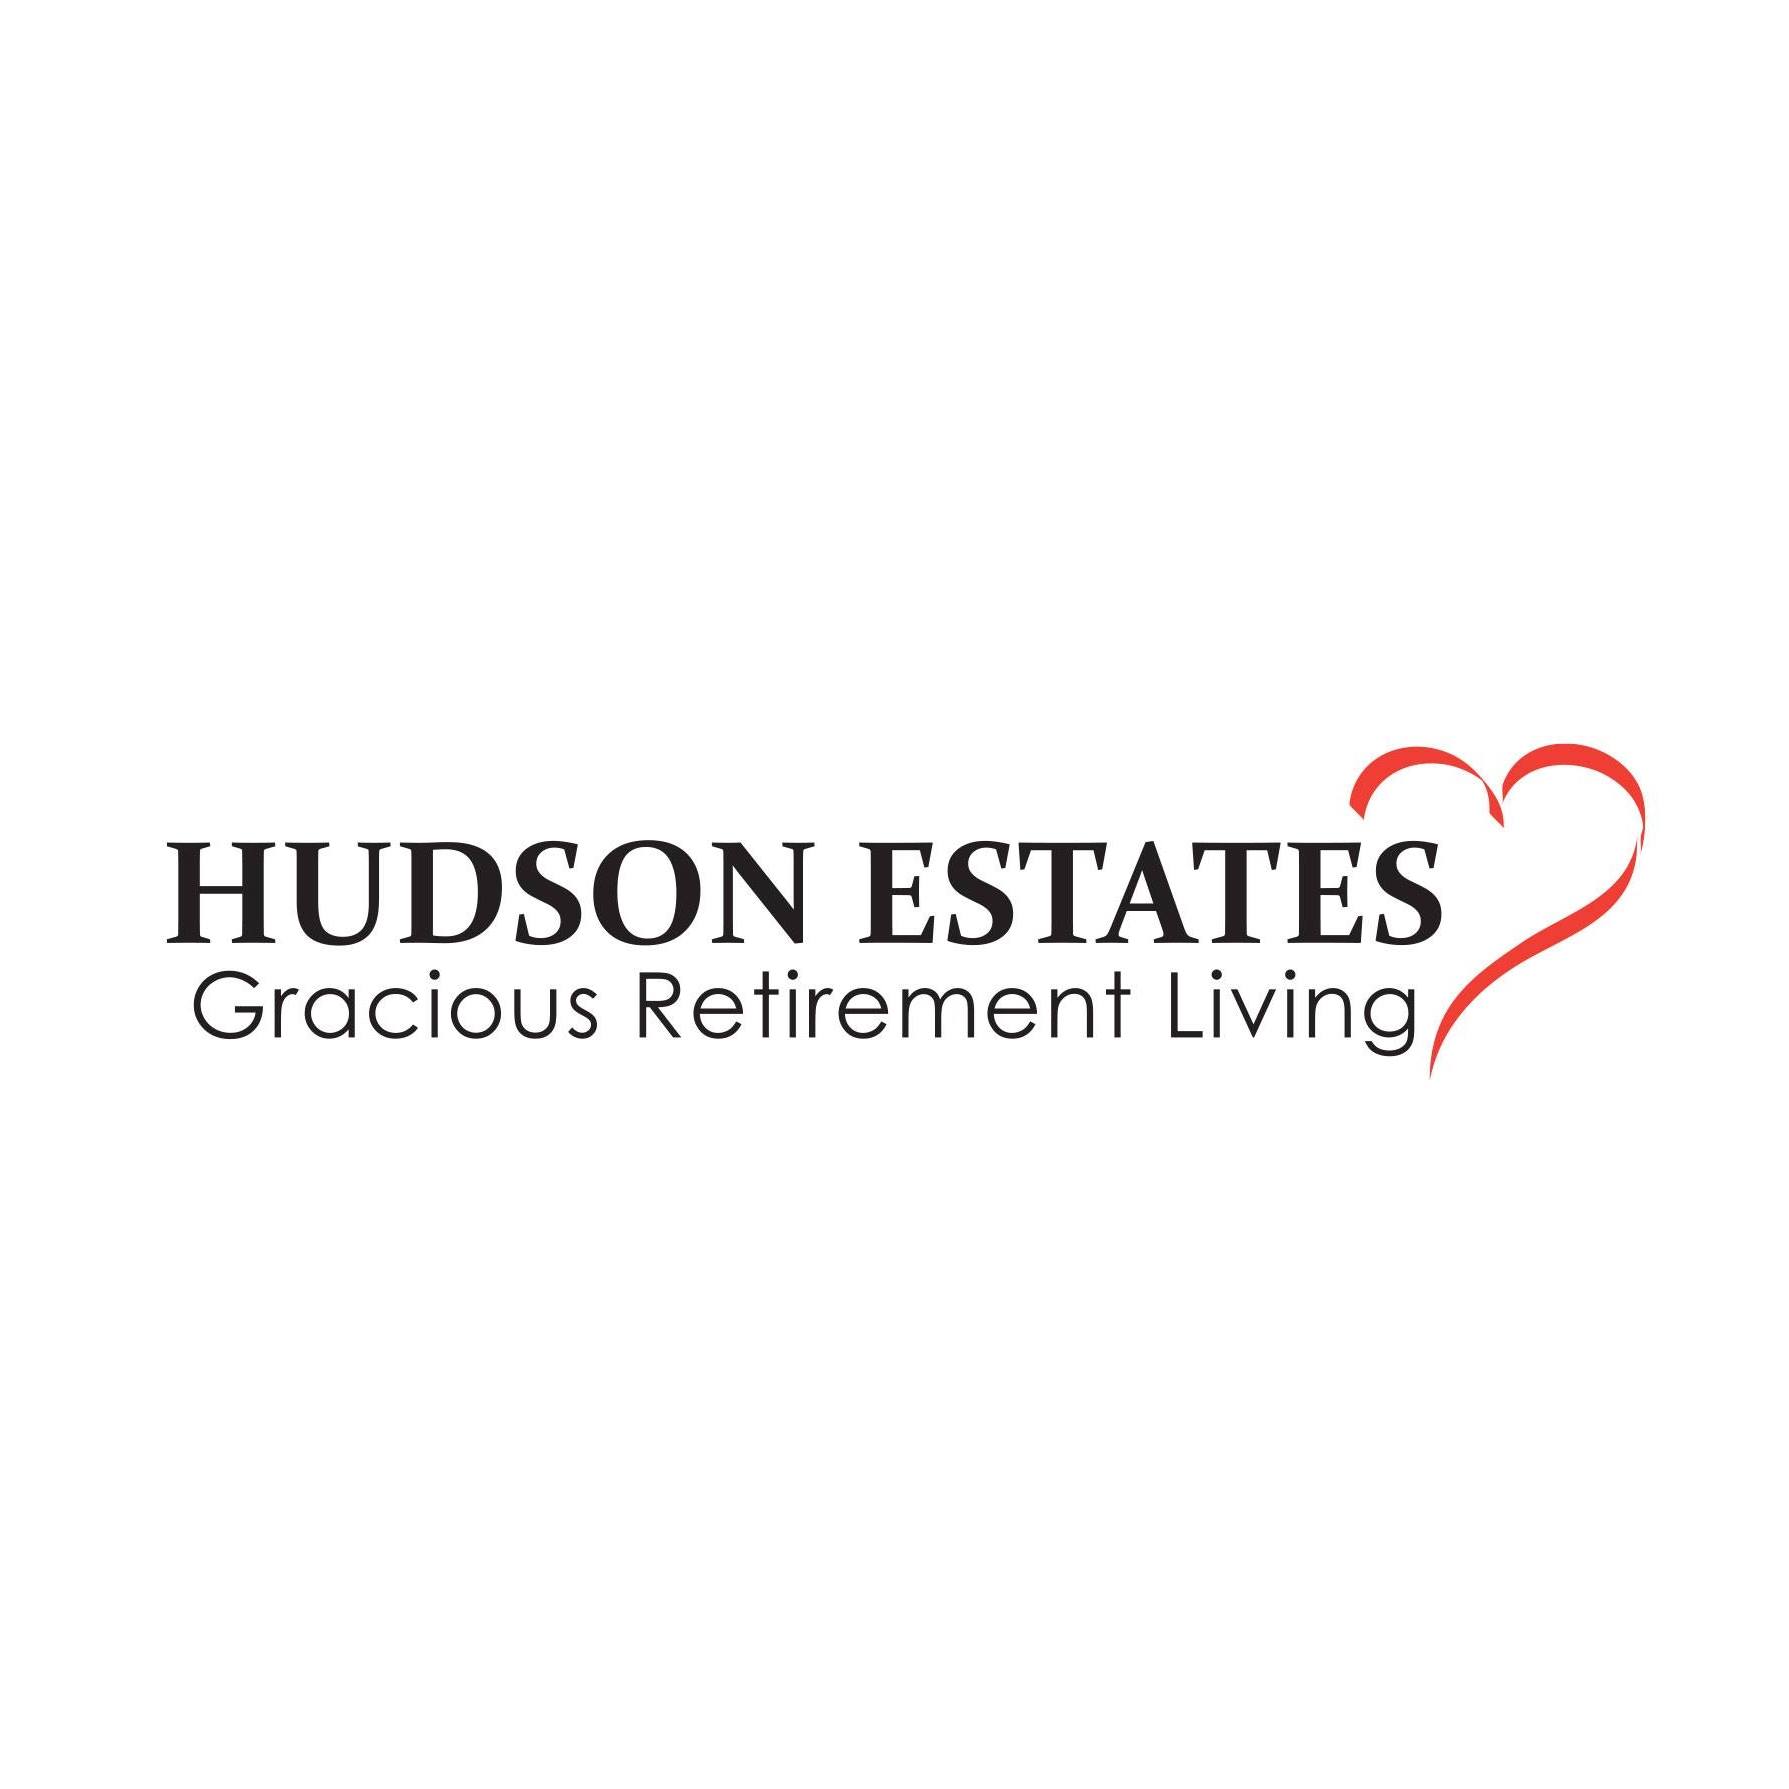 Hudson Estates